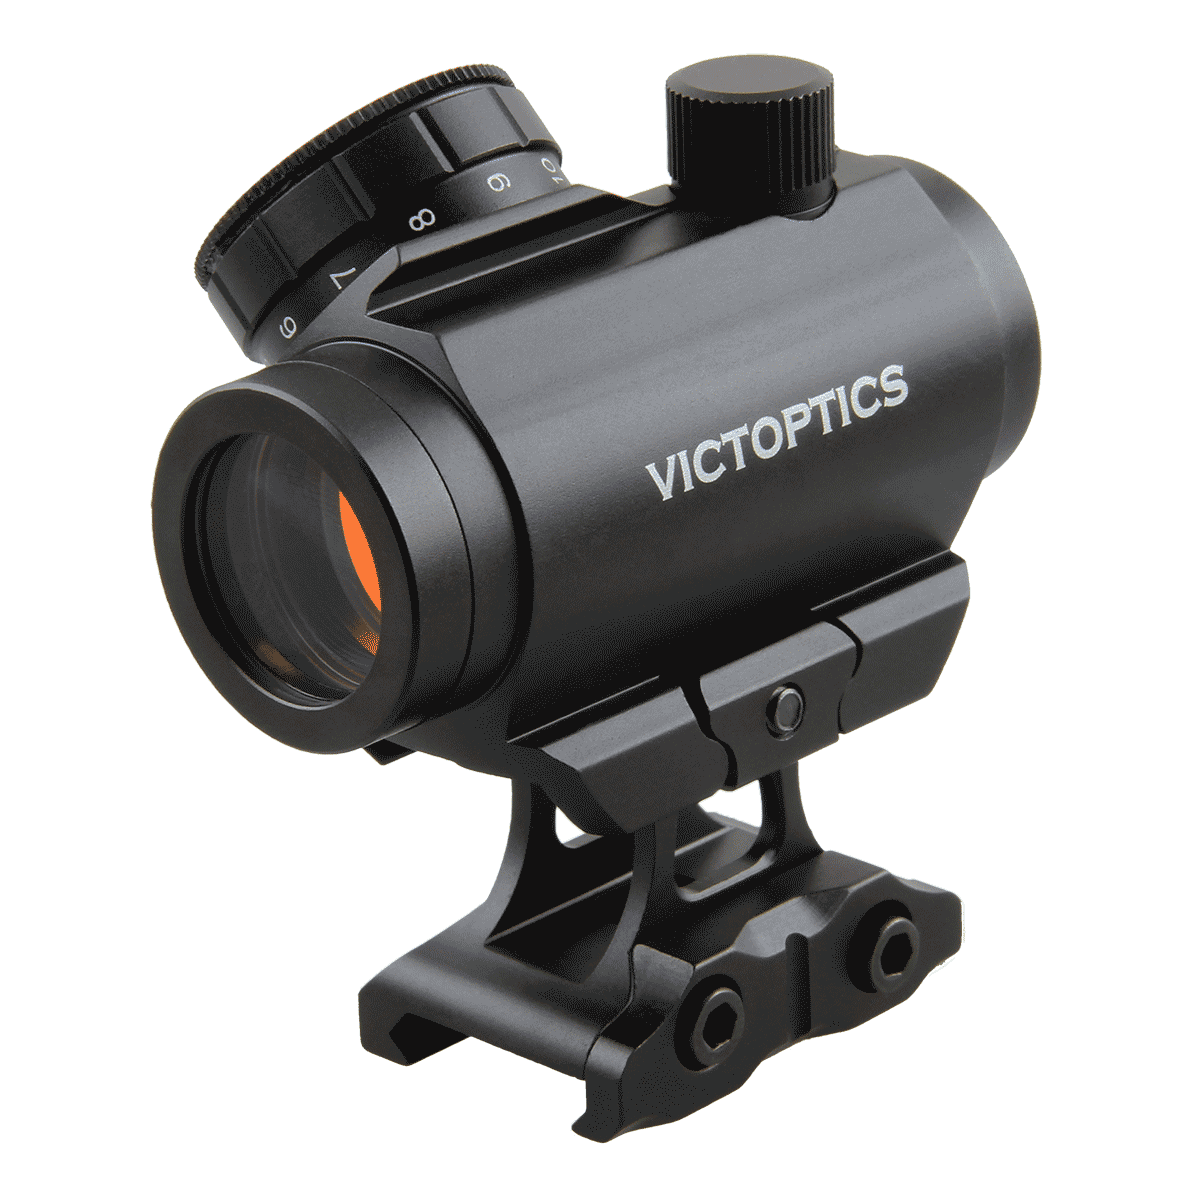 Vector Optics (Victoptics) RDSL-17 1 x 22 Red Dot Sight